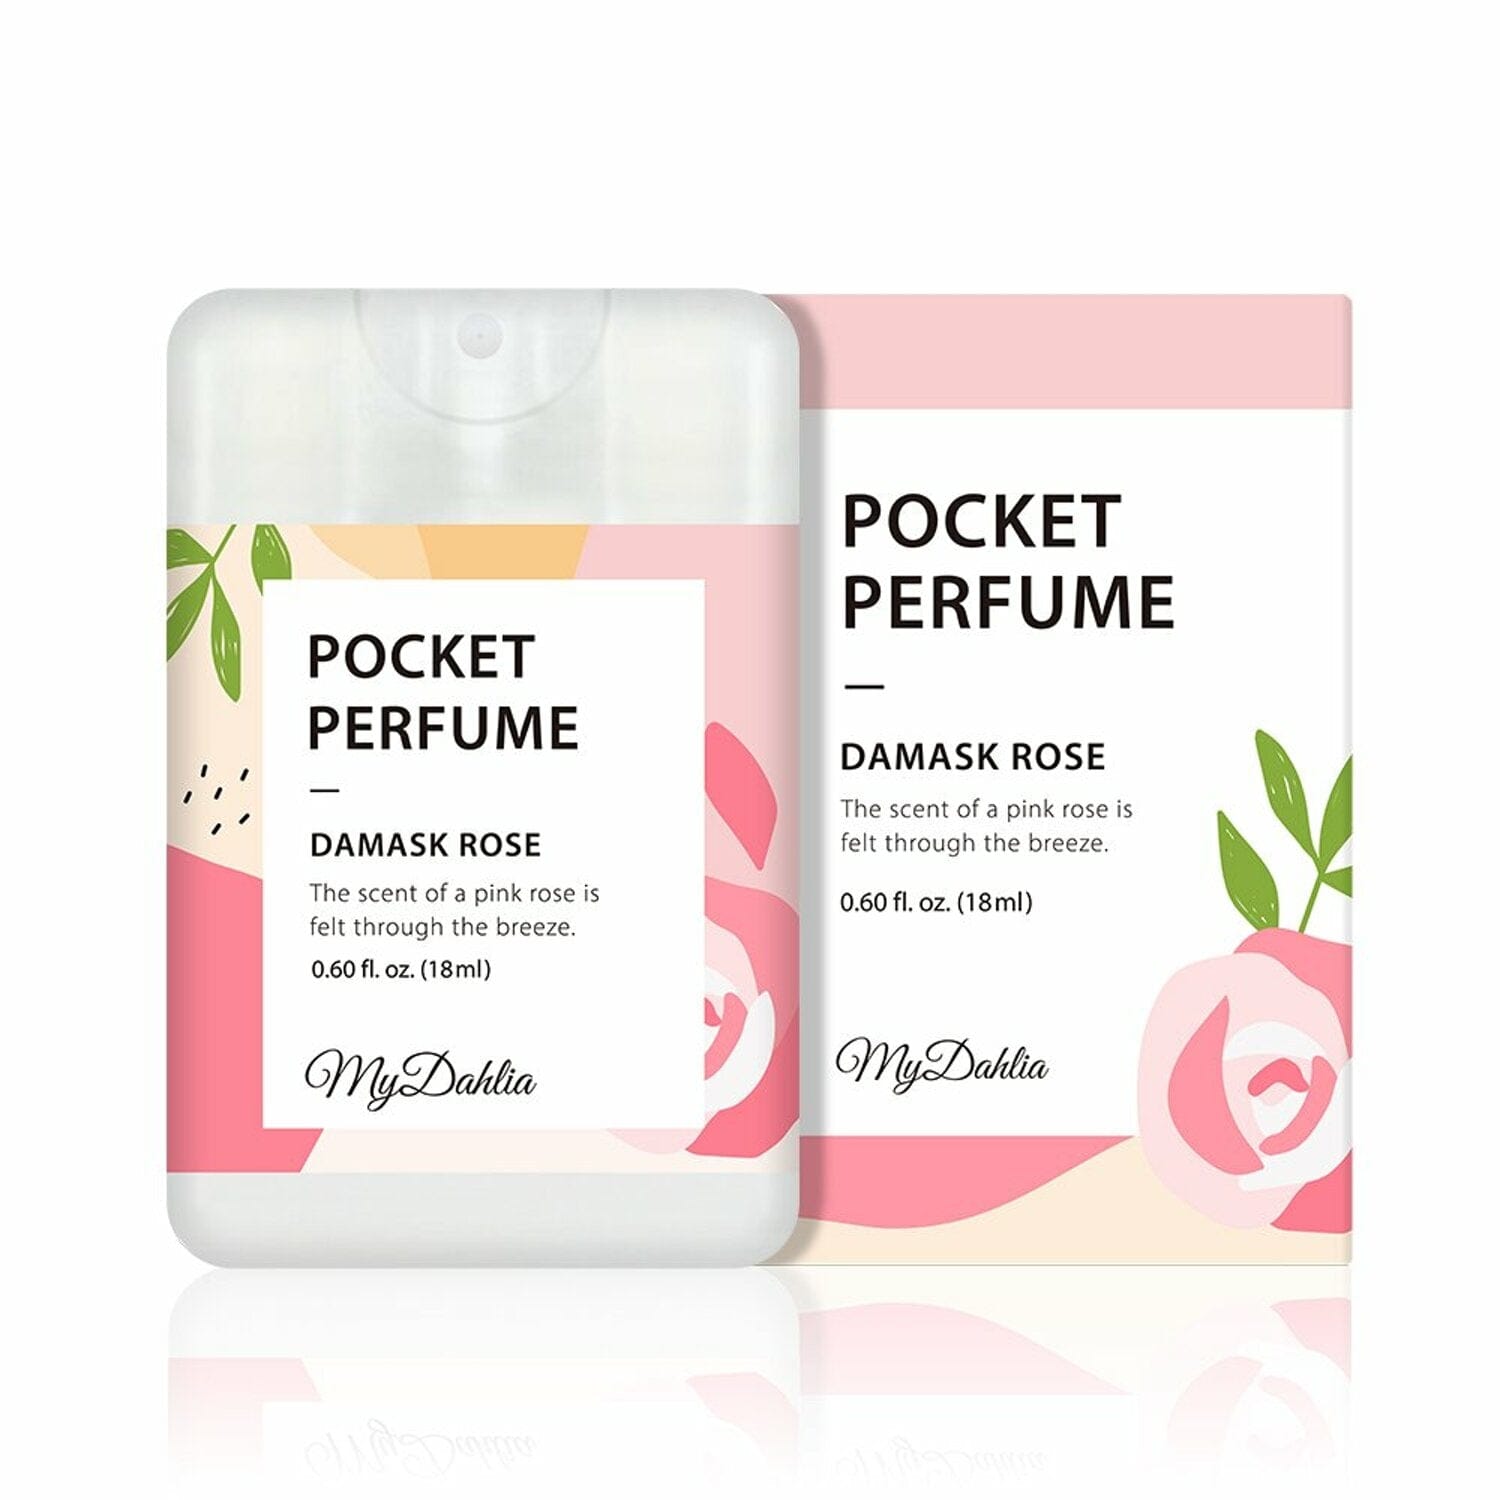 MY DAHLIA Pocket Perfume